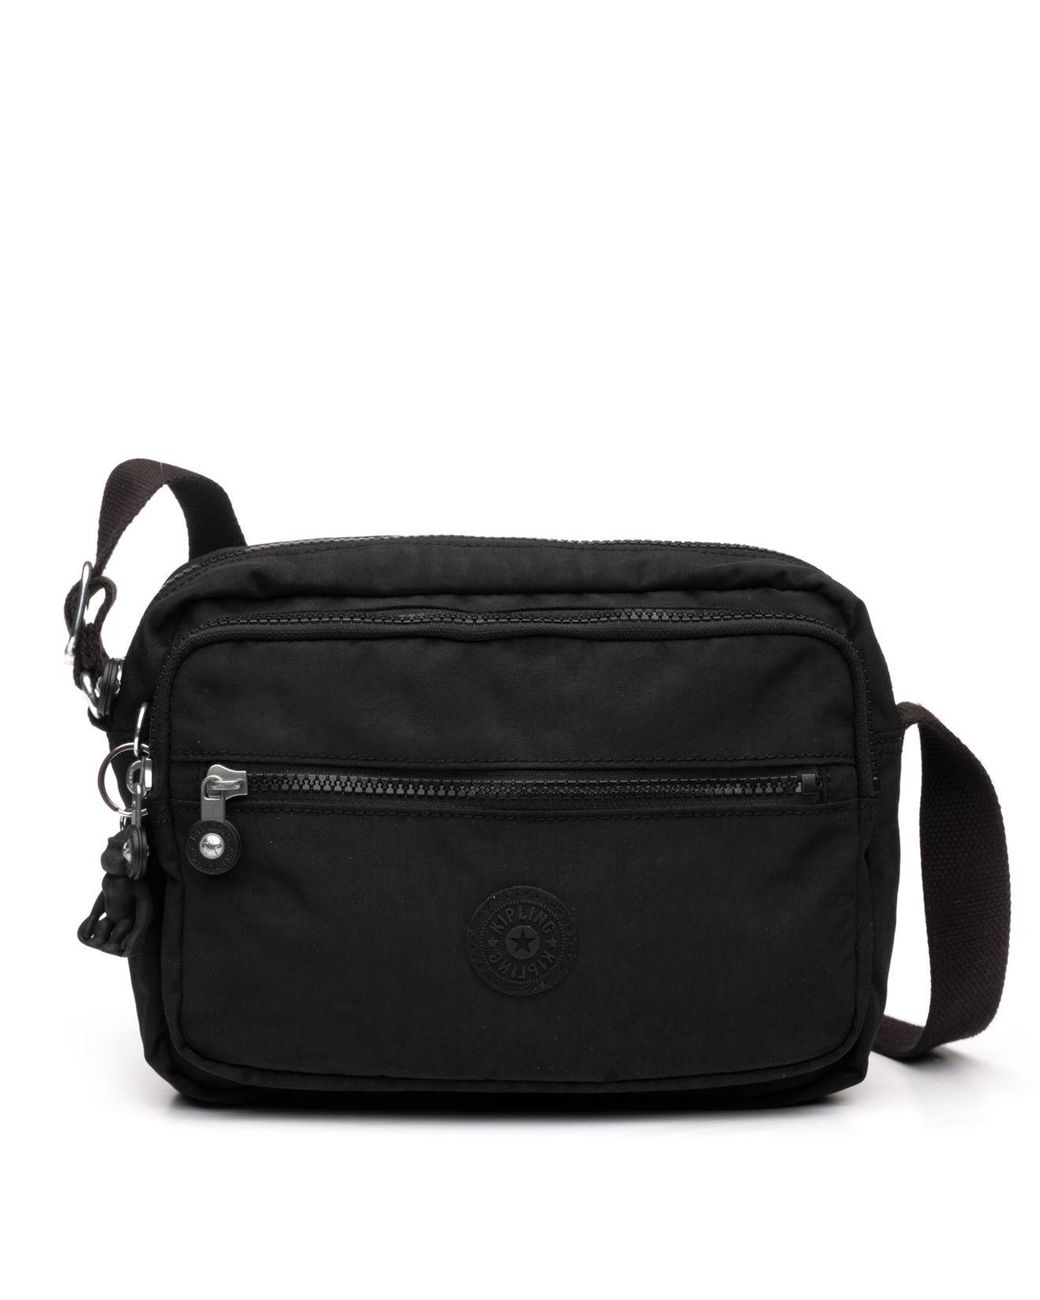 Kipling Synthetic Abanu Mini Convertible Bag in Black - Lyst